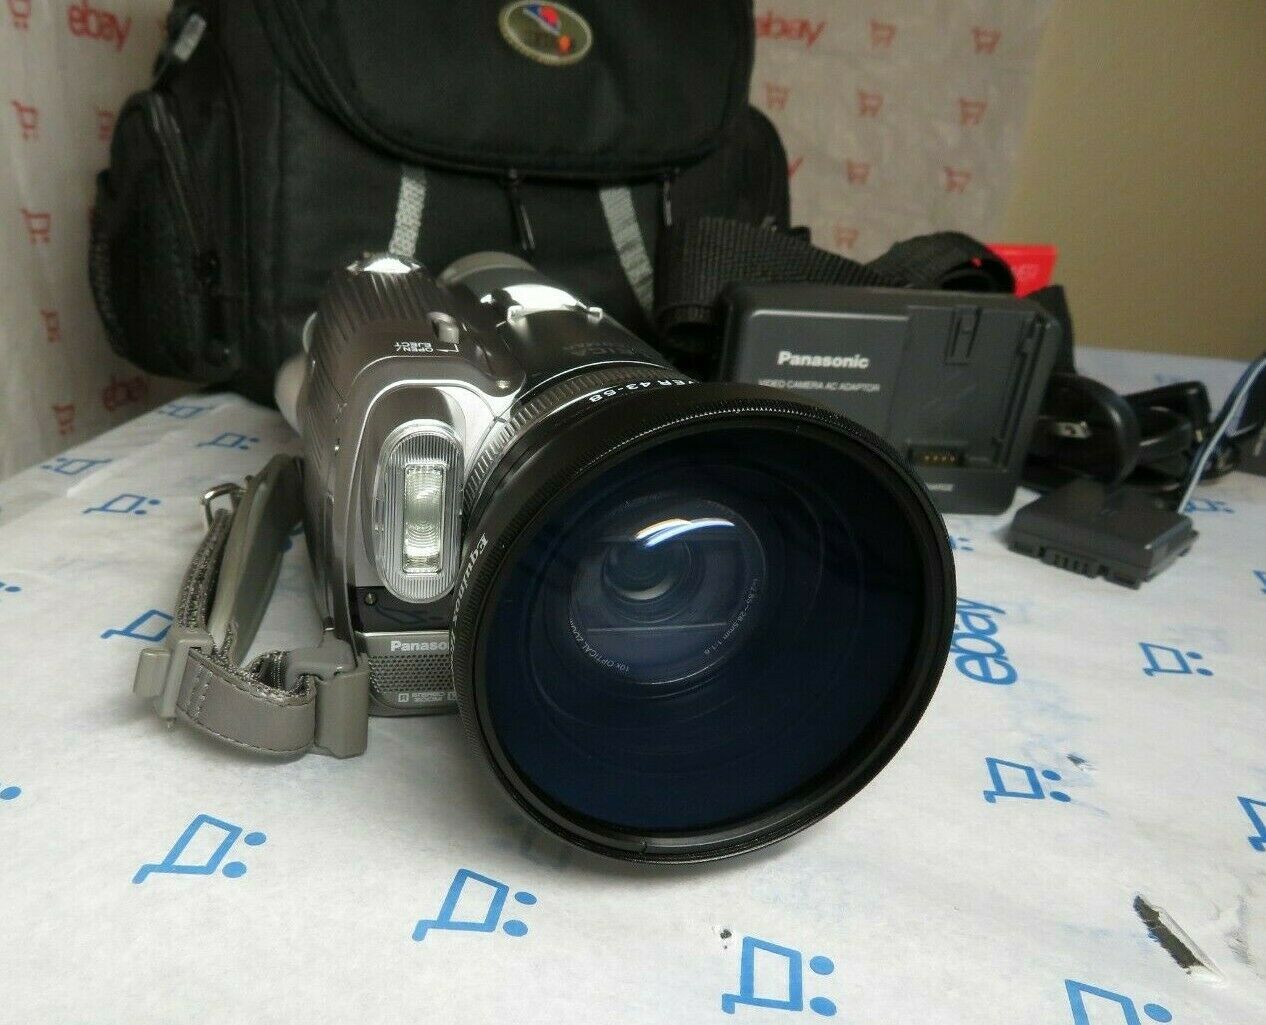 Panasonic GS250 3CCD Leica Dicomar Mini DV HD Video Camcorder BUNDLE + Wide Lens - Camcorders